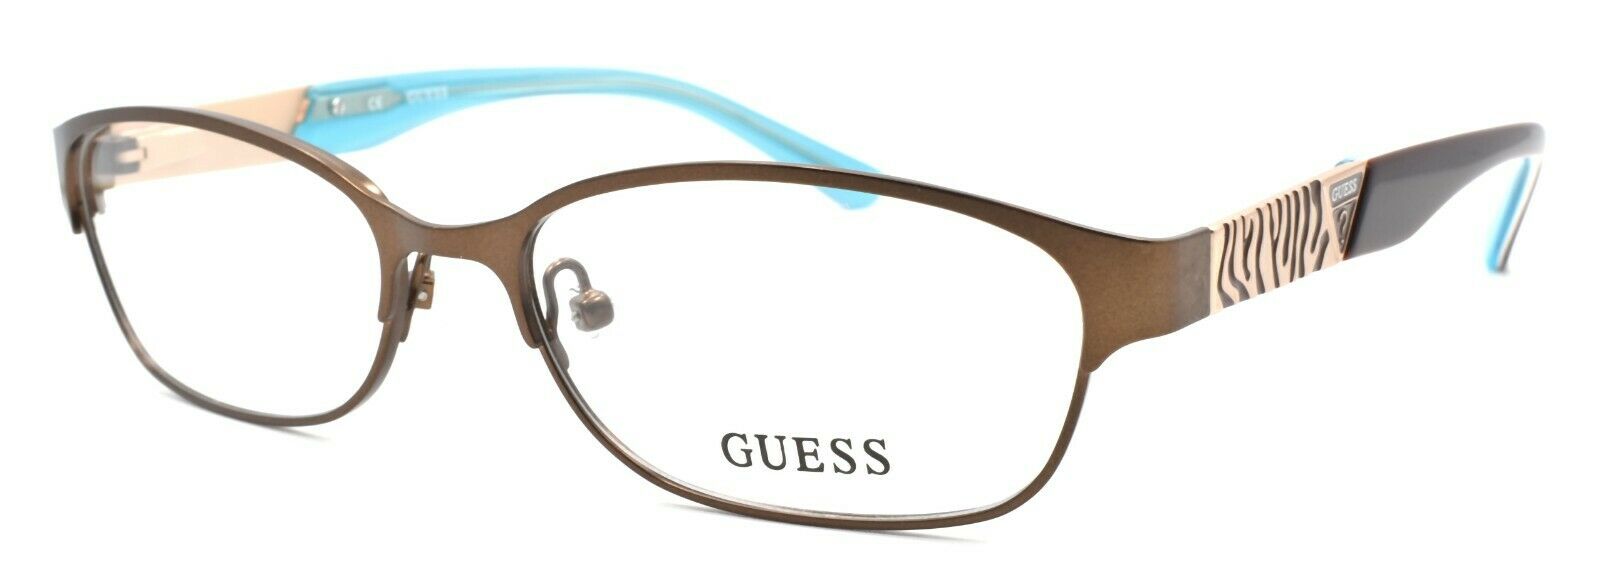 1-GUESS GU2353 BRN Women's Eyeglasses Frames 53-16-135 Brown-715583651012-IKSpecs